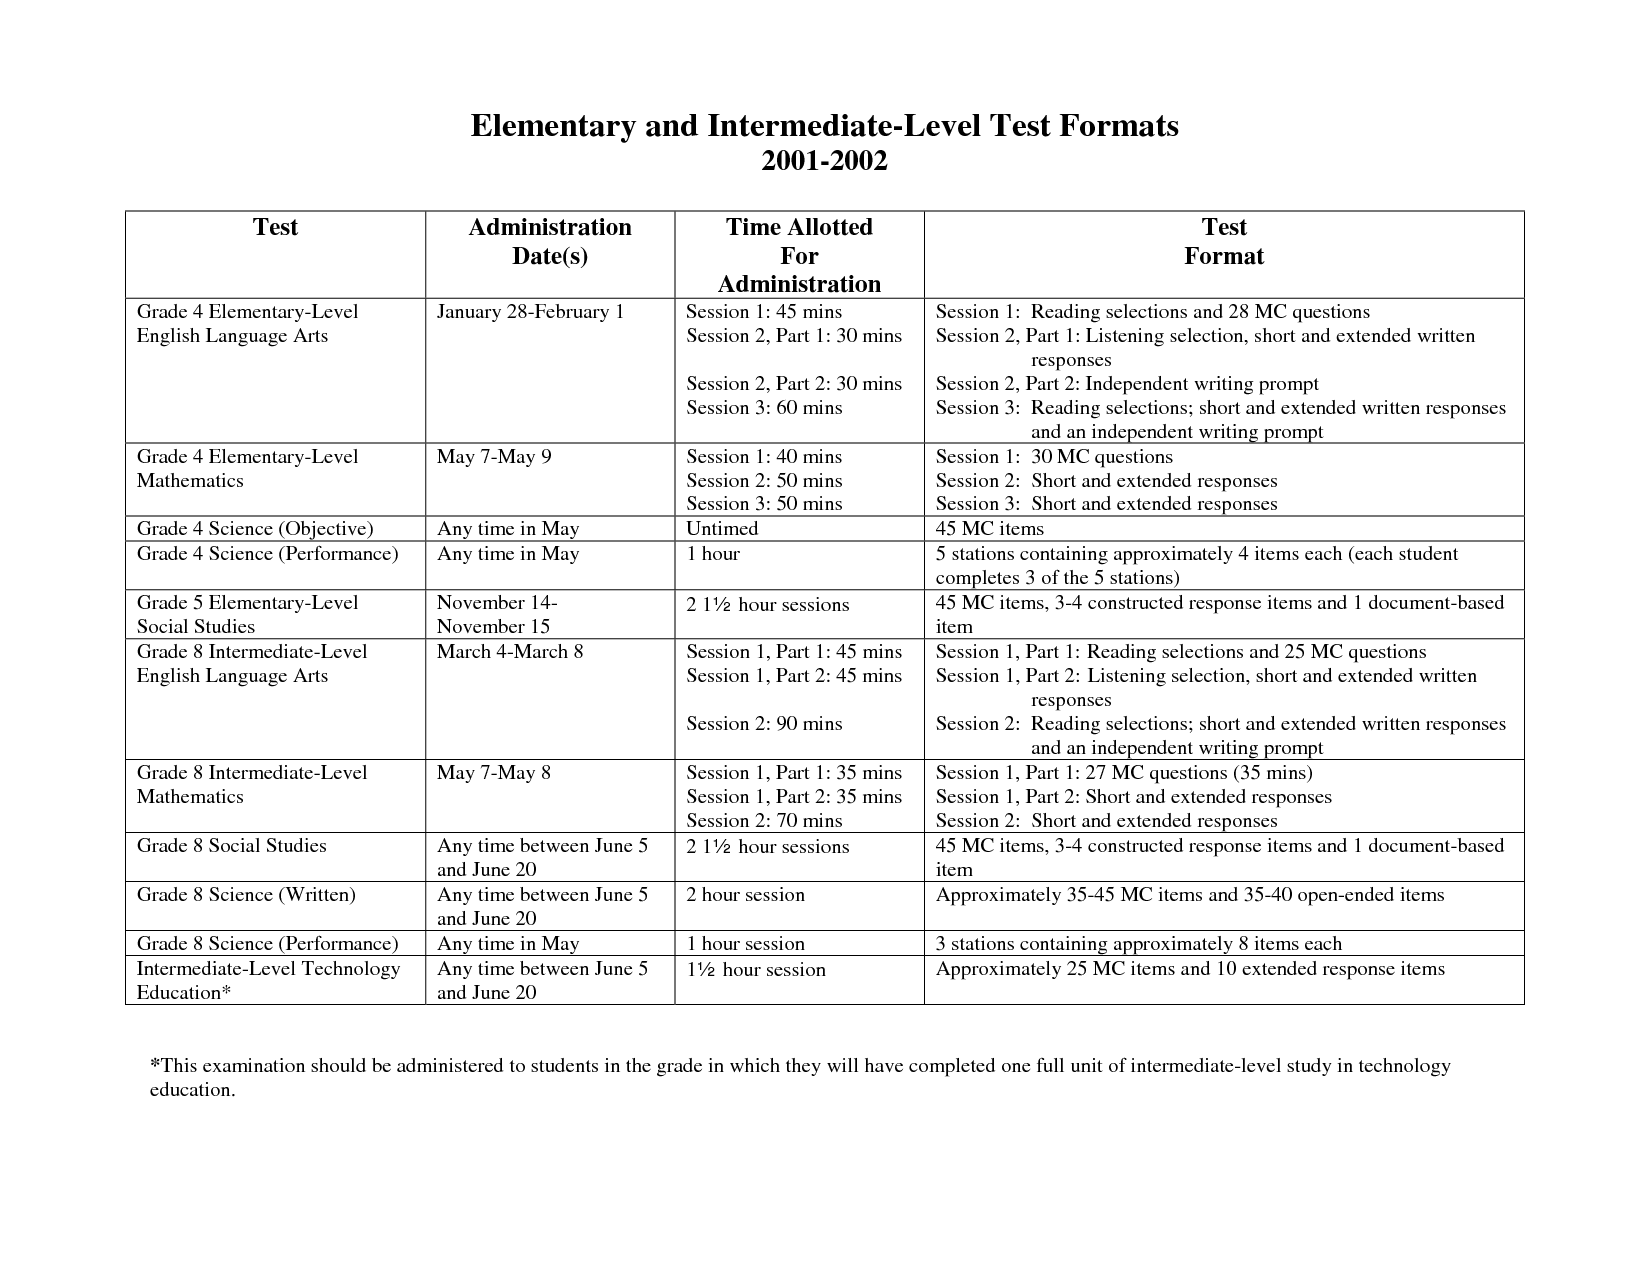 Elementary Test Formats